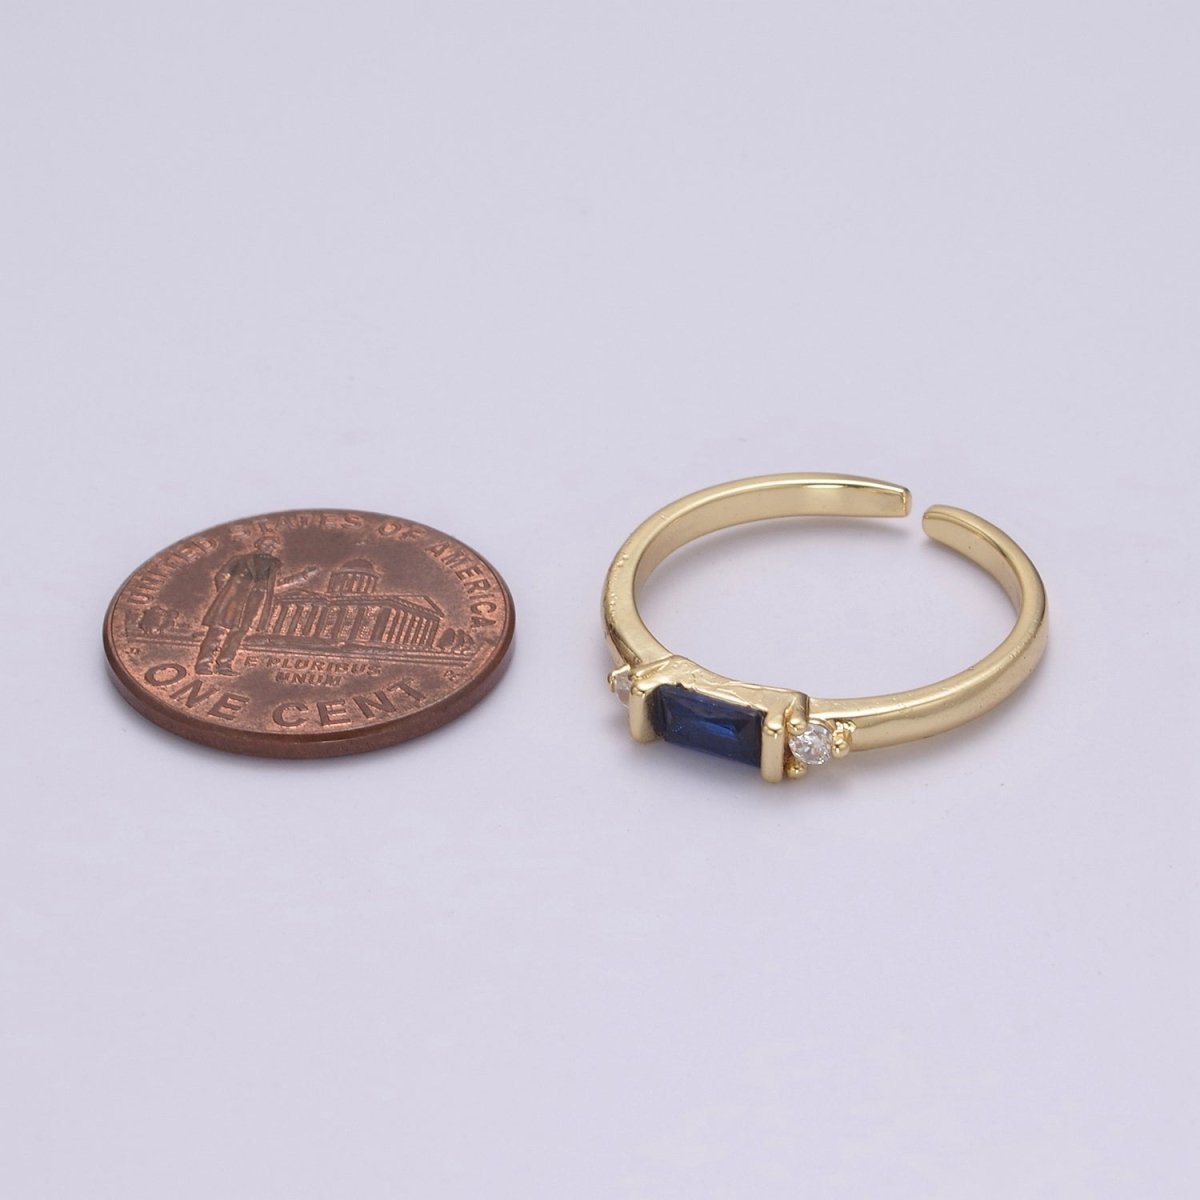 14K Gold Filled Baguette Ring / Petite Baguette Engagement Ring / Baguette Solitaire Ring / Dainty Birthstone CZ Ring U-163 ~ U-168 - DLUXCA